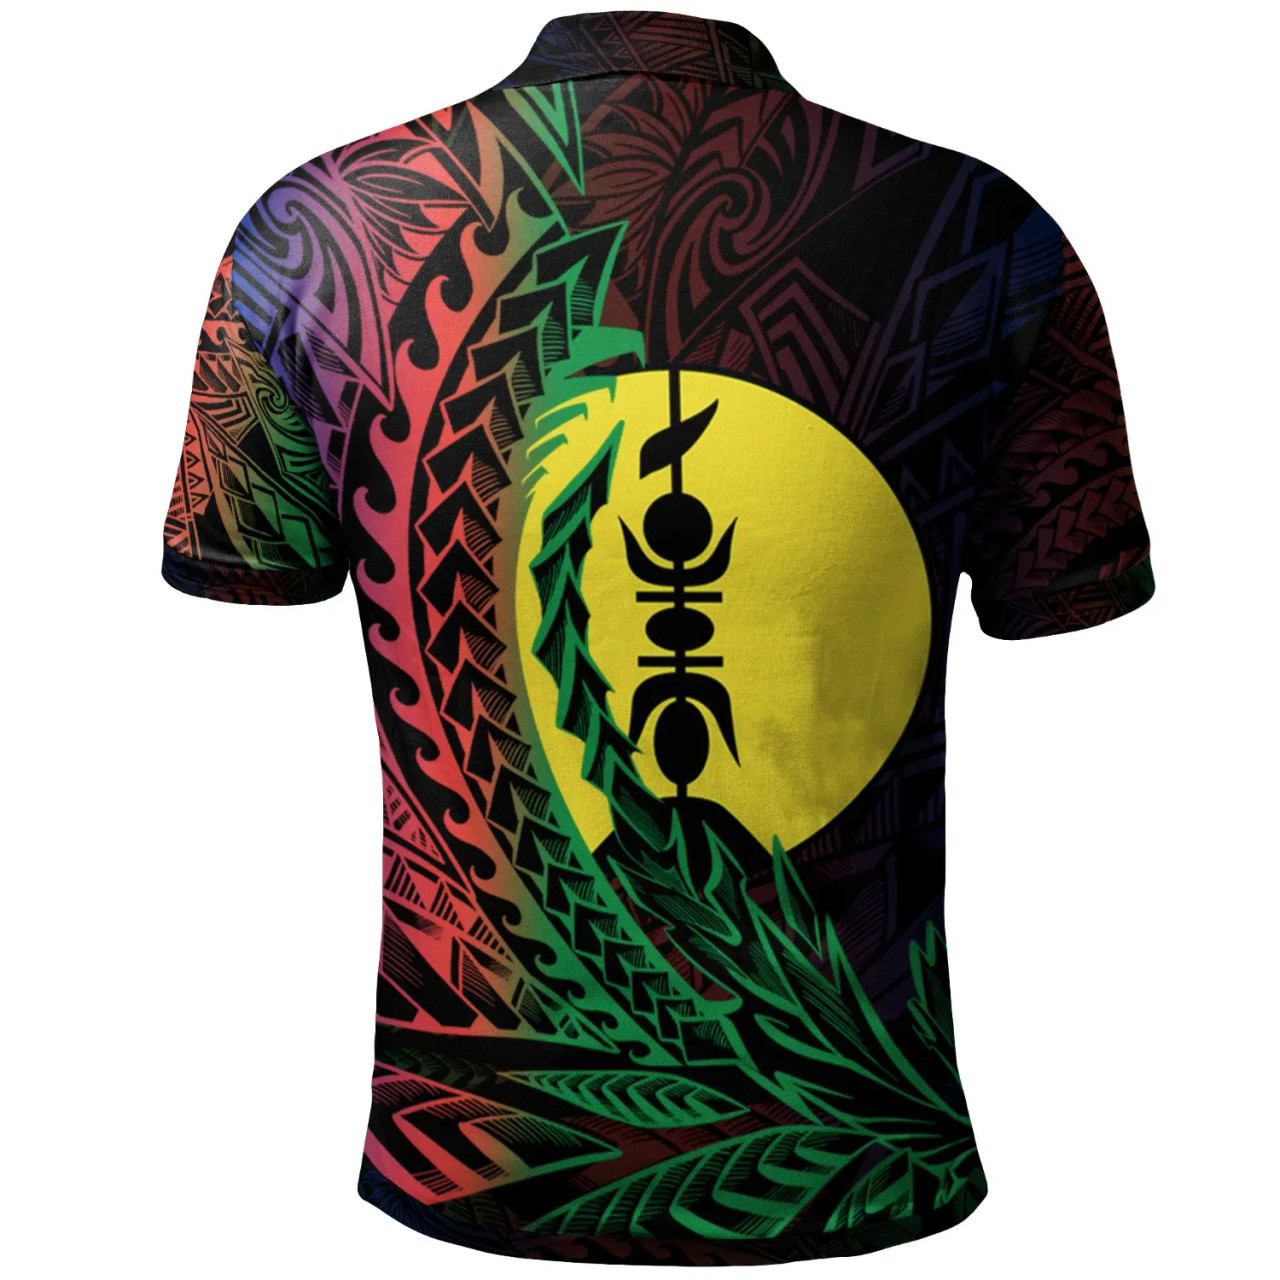 New Caledonia Polo Shirt - Kaala-GomeÌn Wings Style Flag Color 2